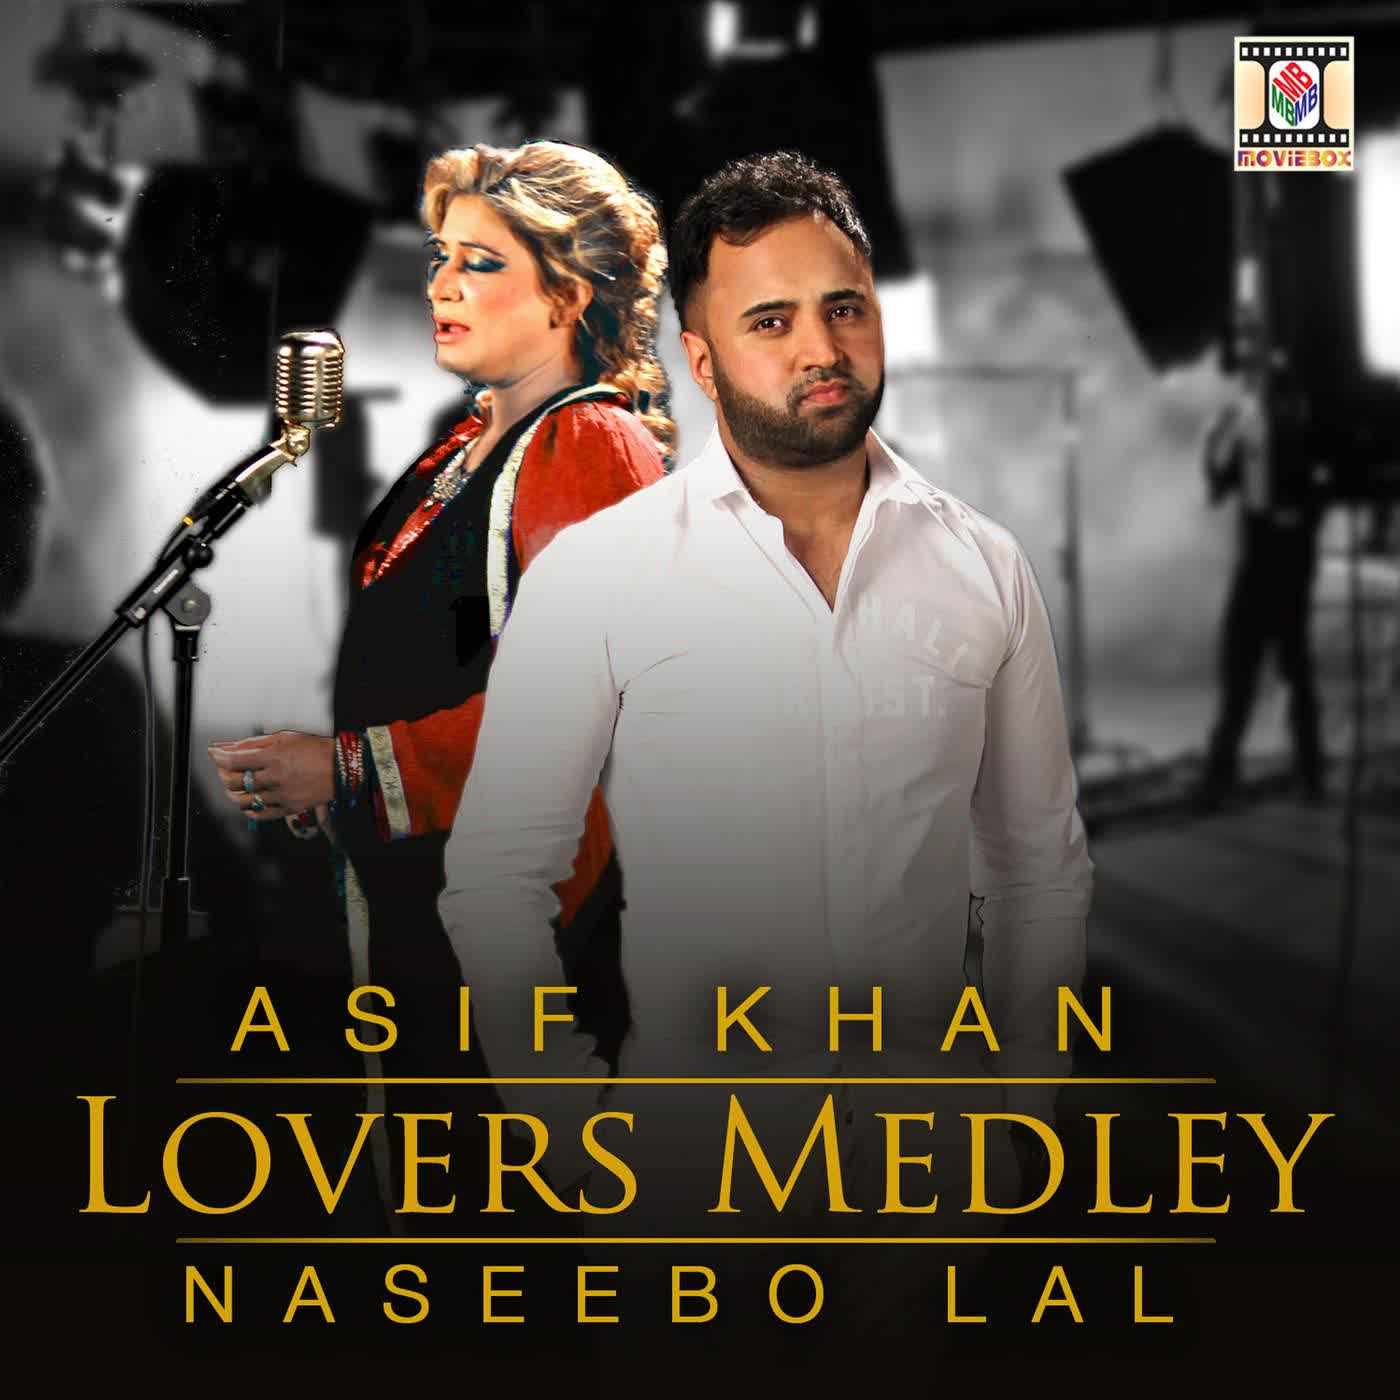 Lovers Medley Asif Khan,Naseebo Lal  Mp3 song download